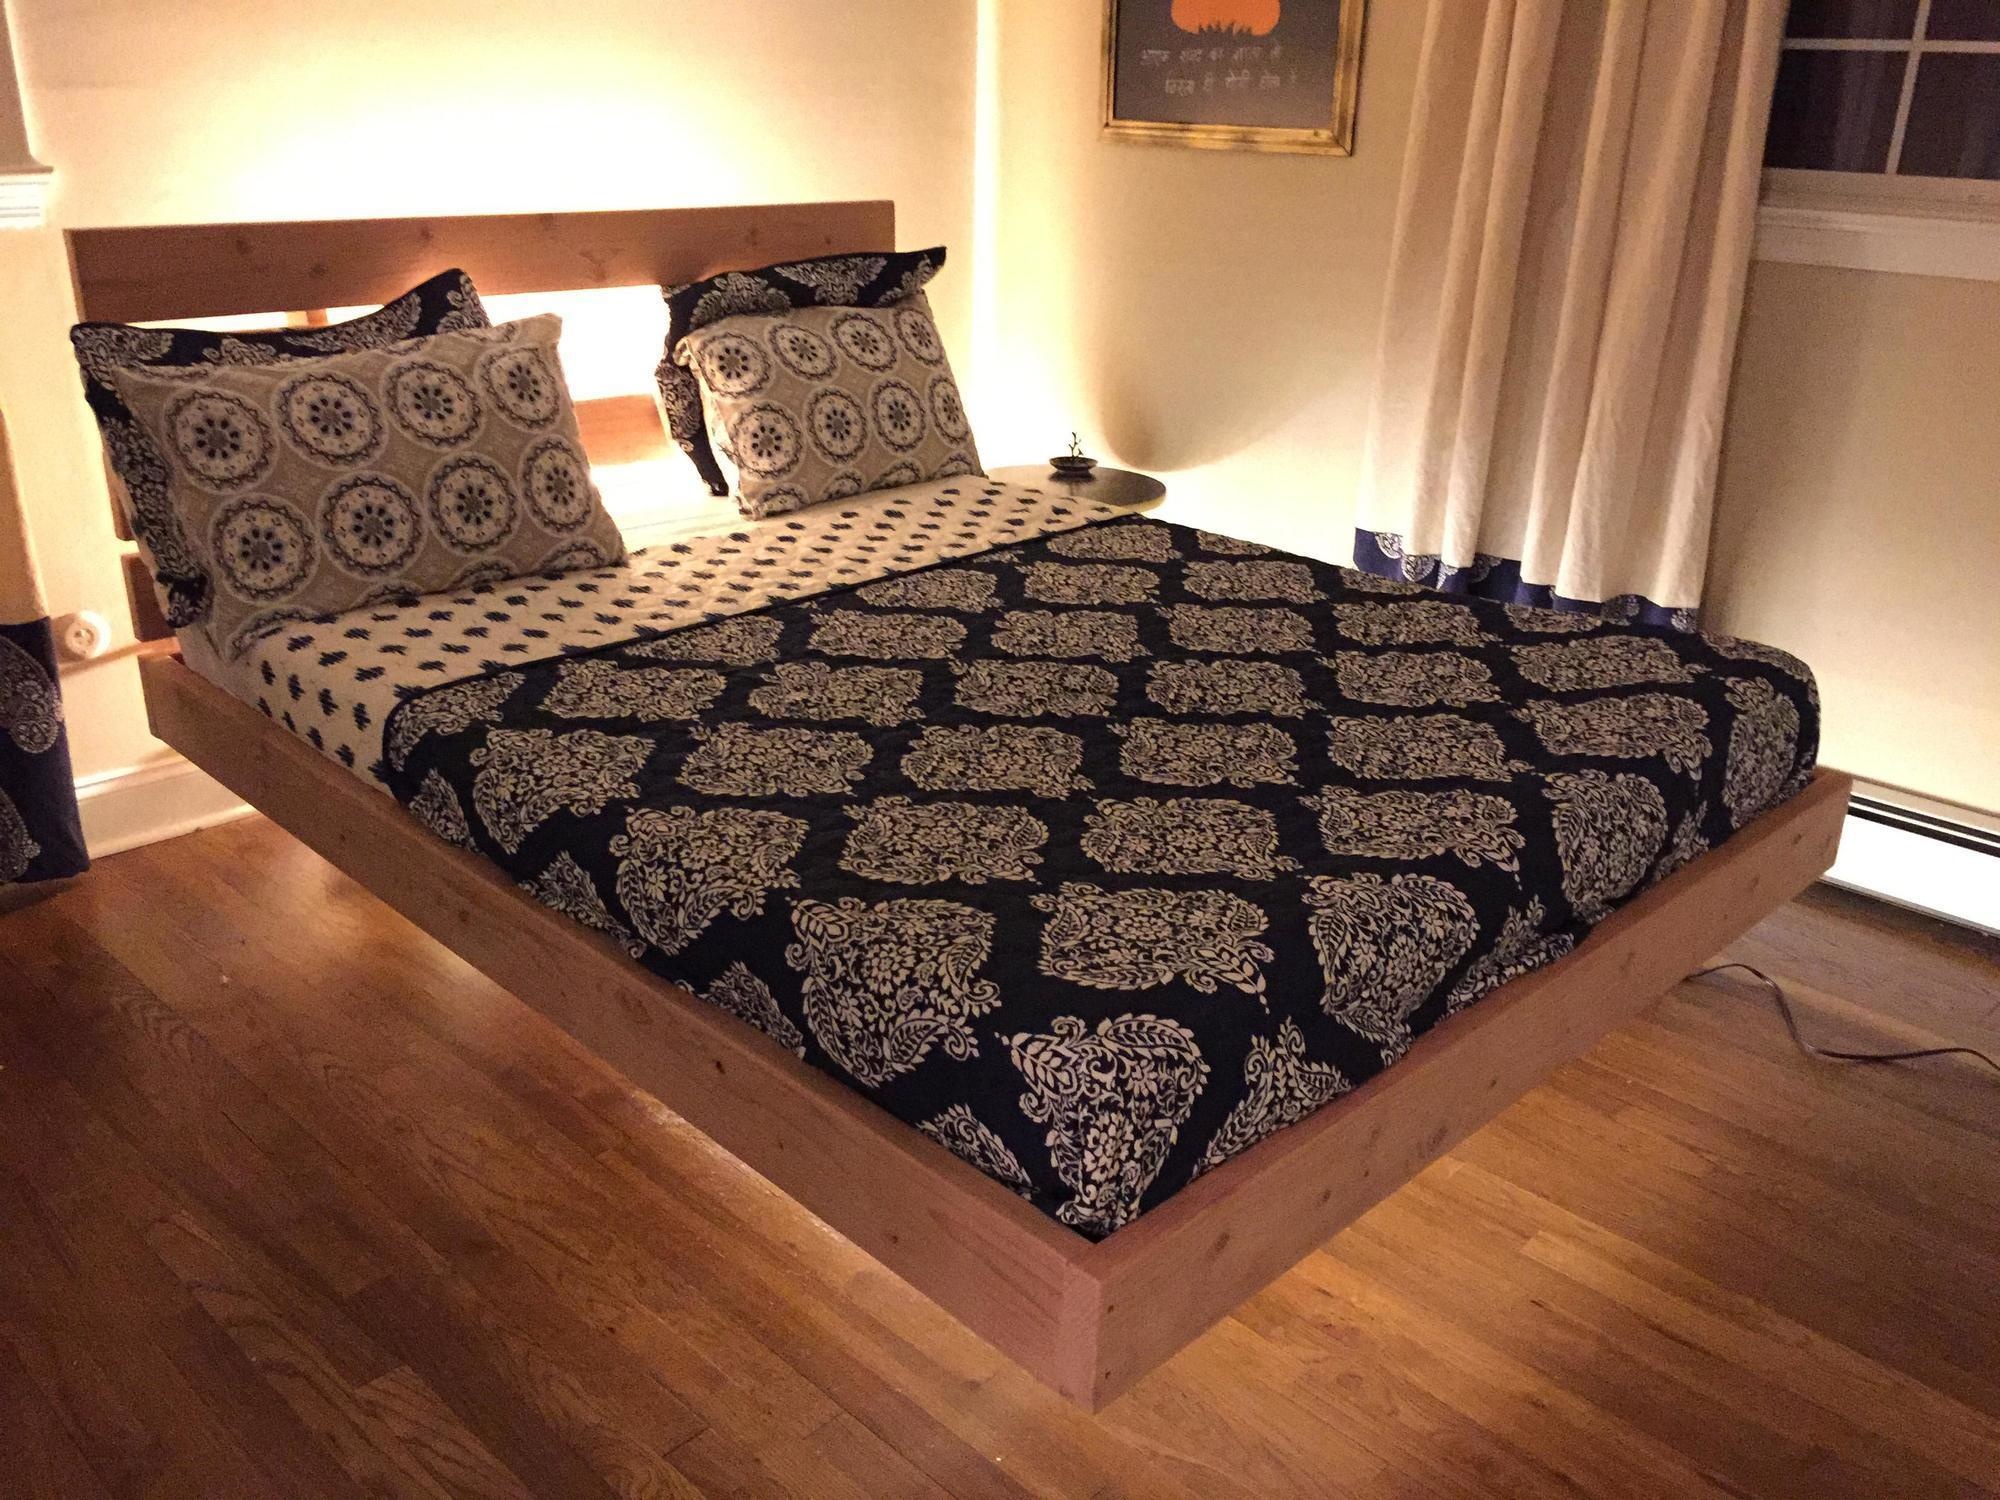 20 DIY Hanging Beds | Guide Patterns